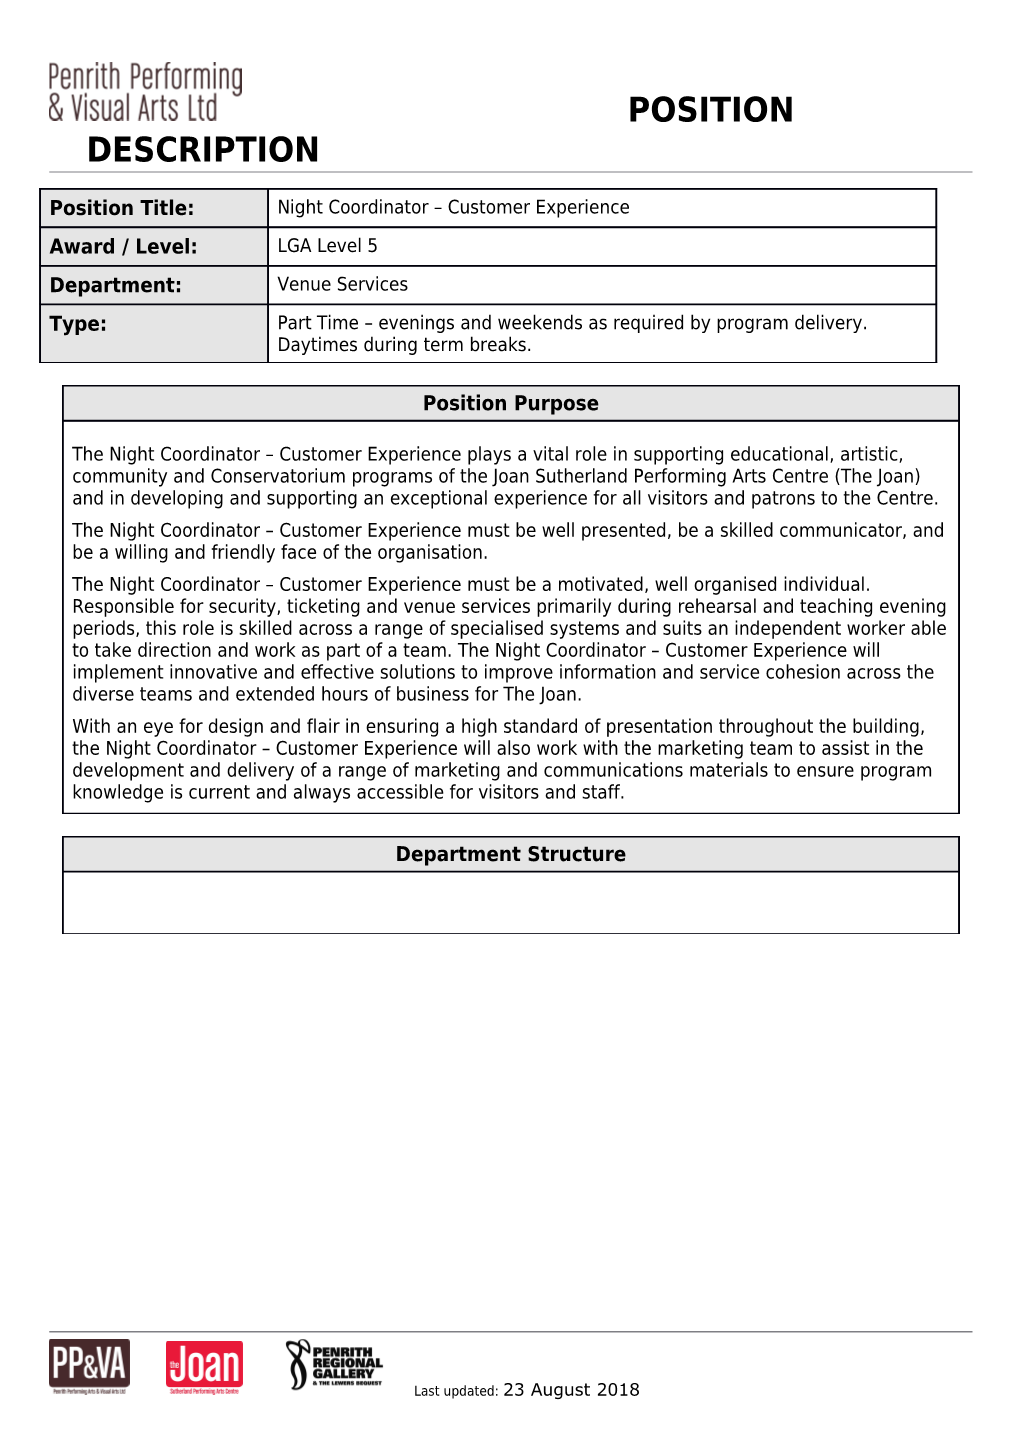 Penrith City Council - Position Description